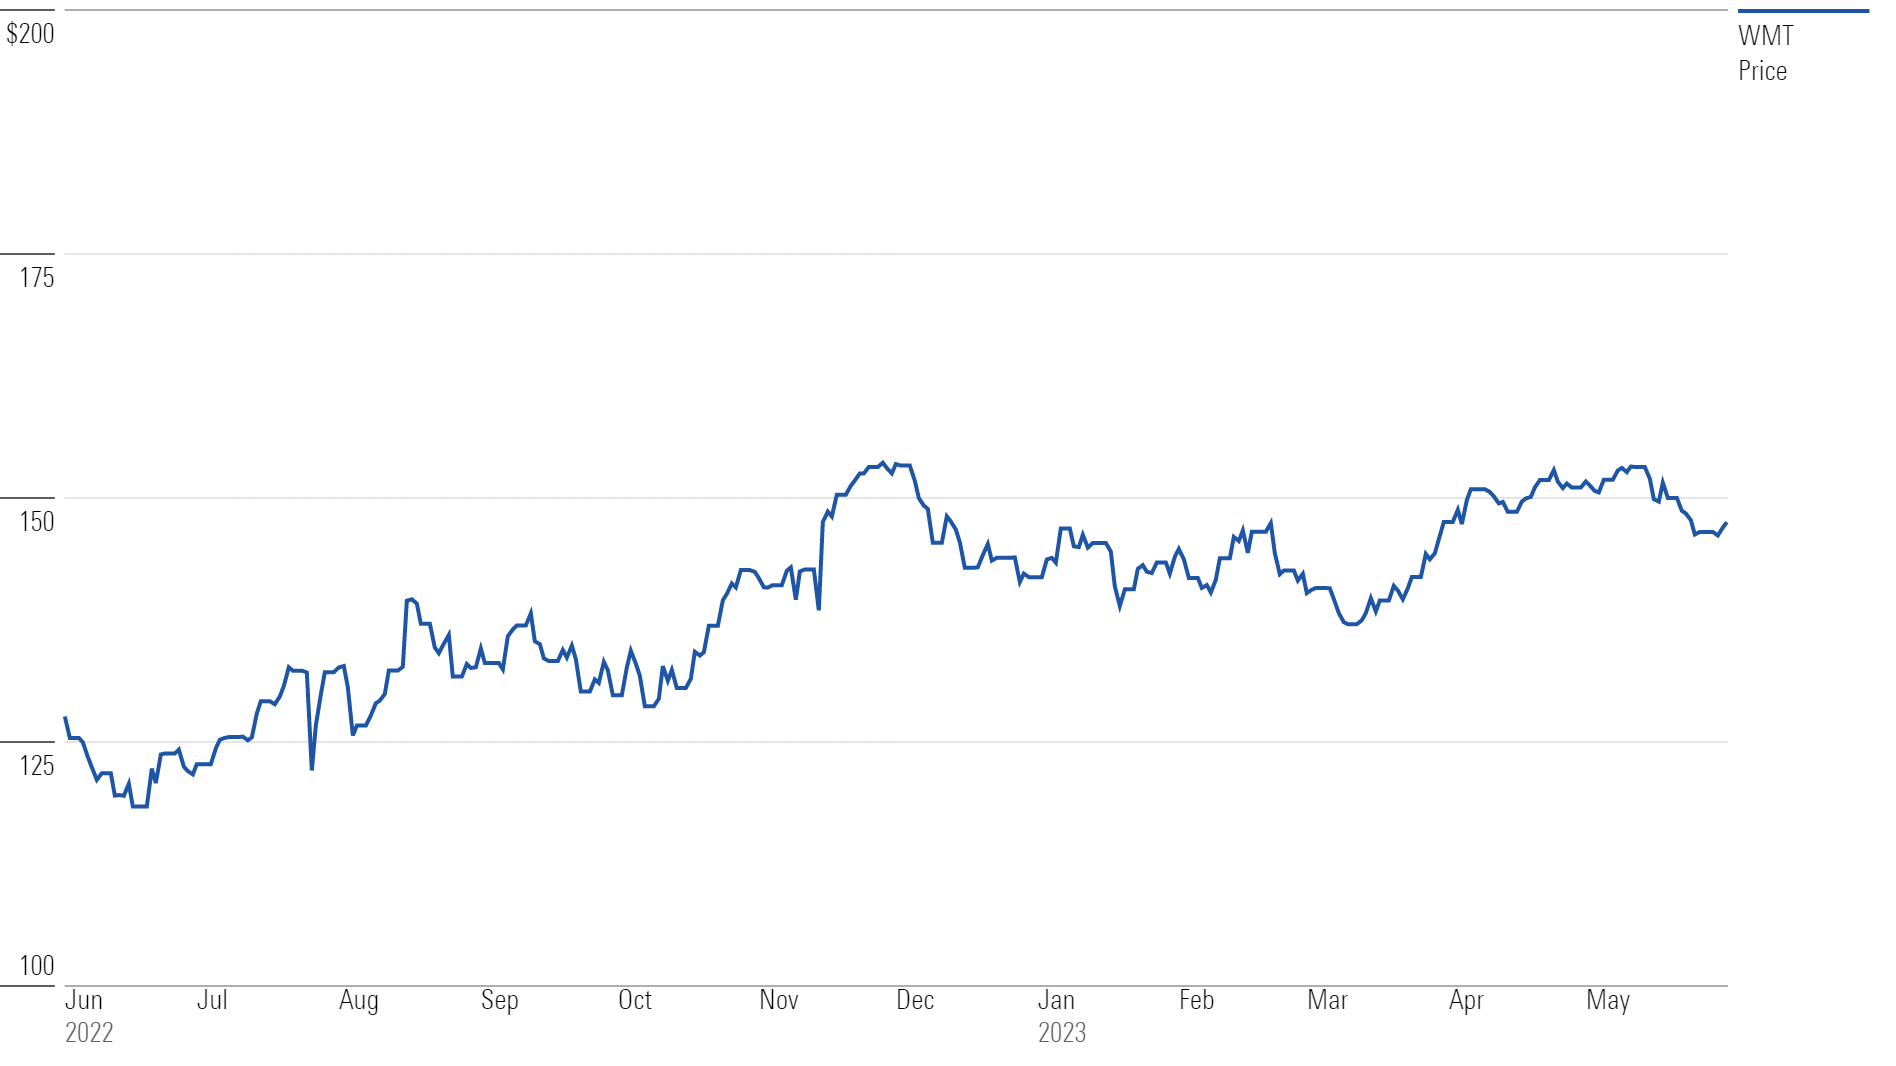 walmart stock price in the last year